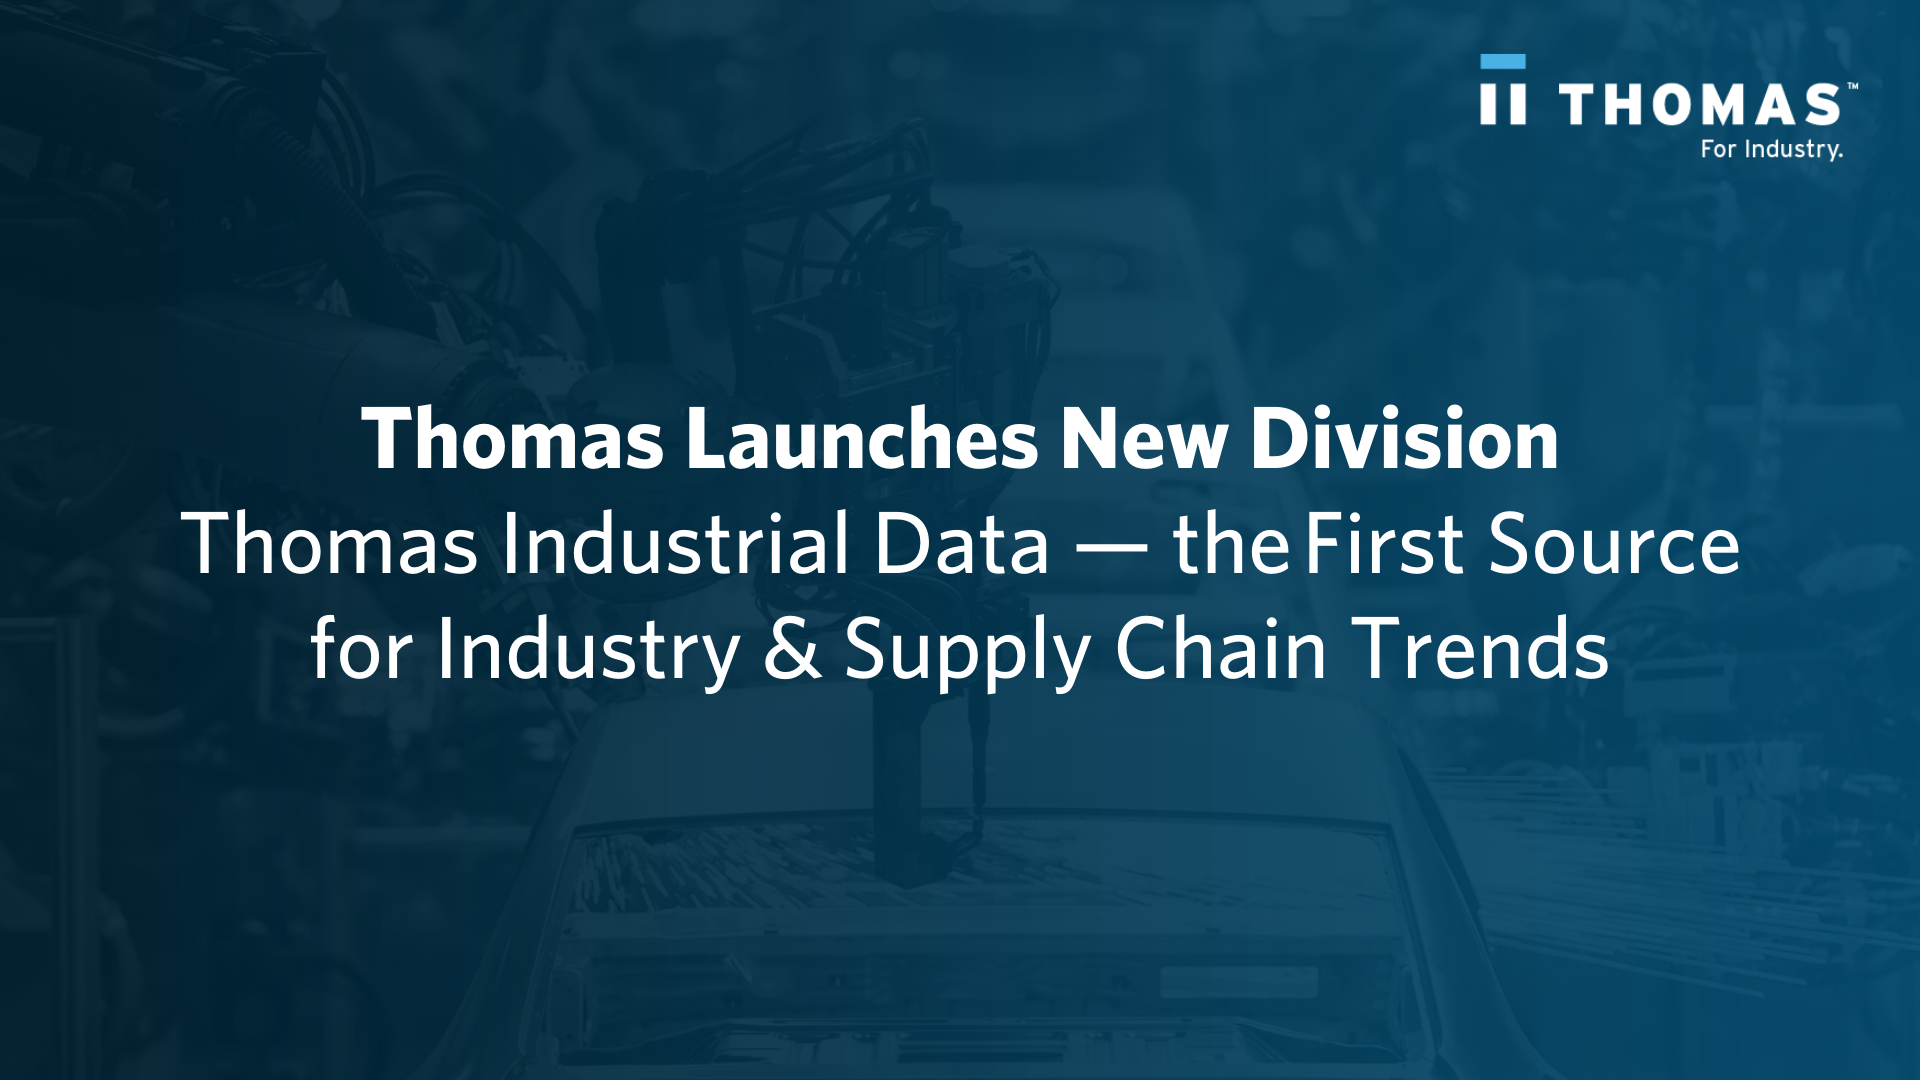 Introducing Thomas Industrial Data